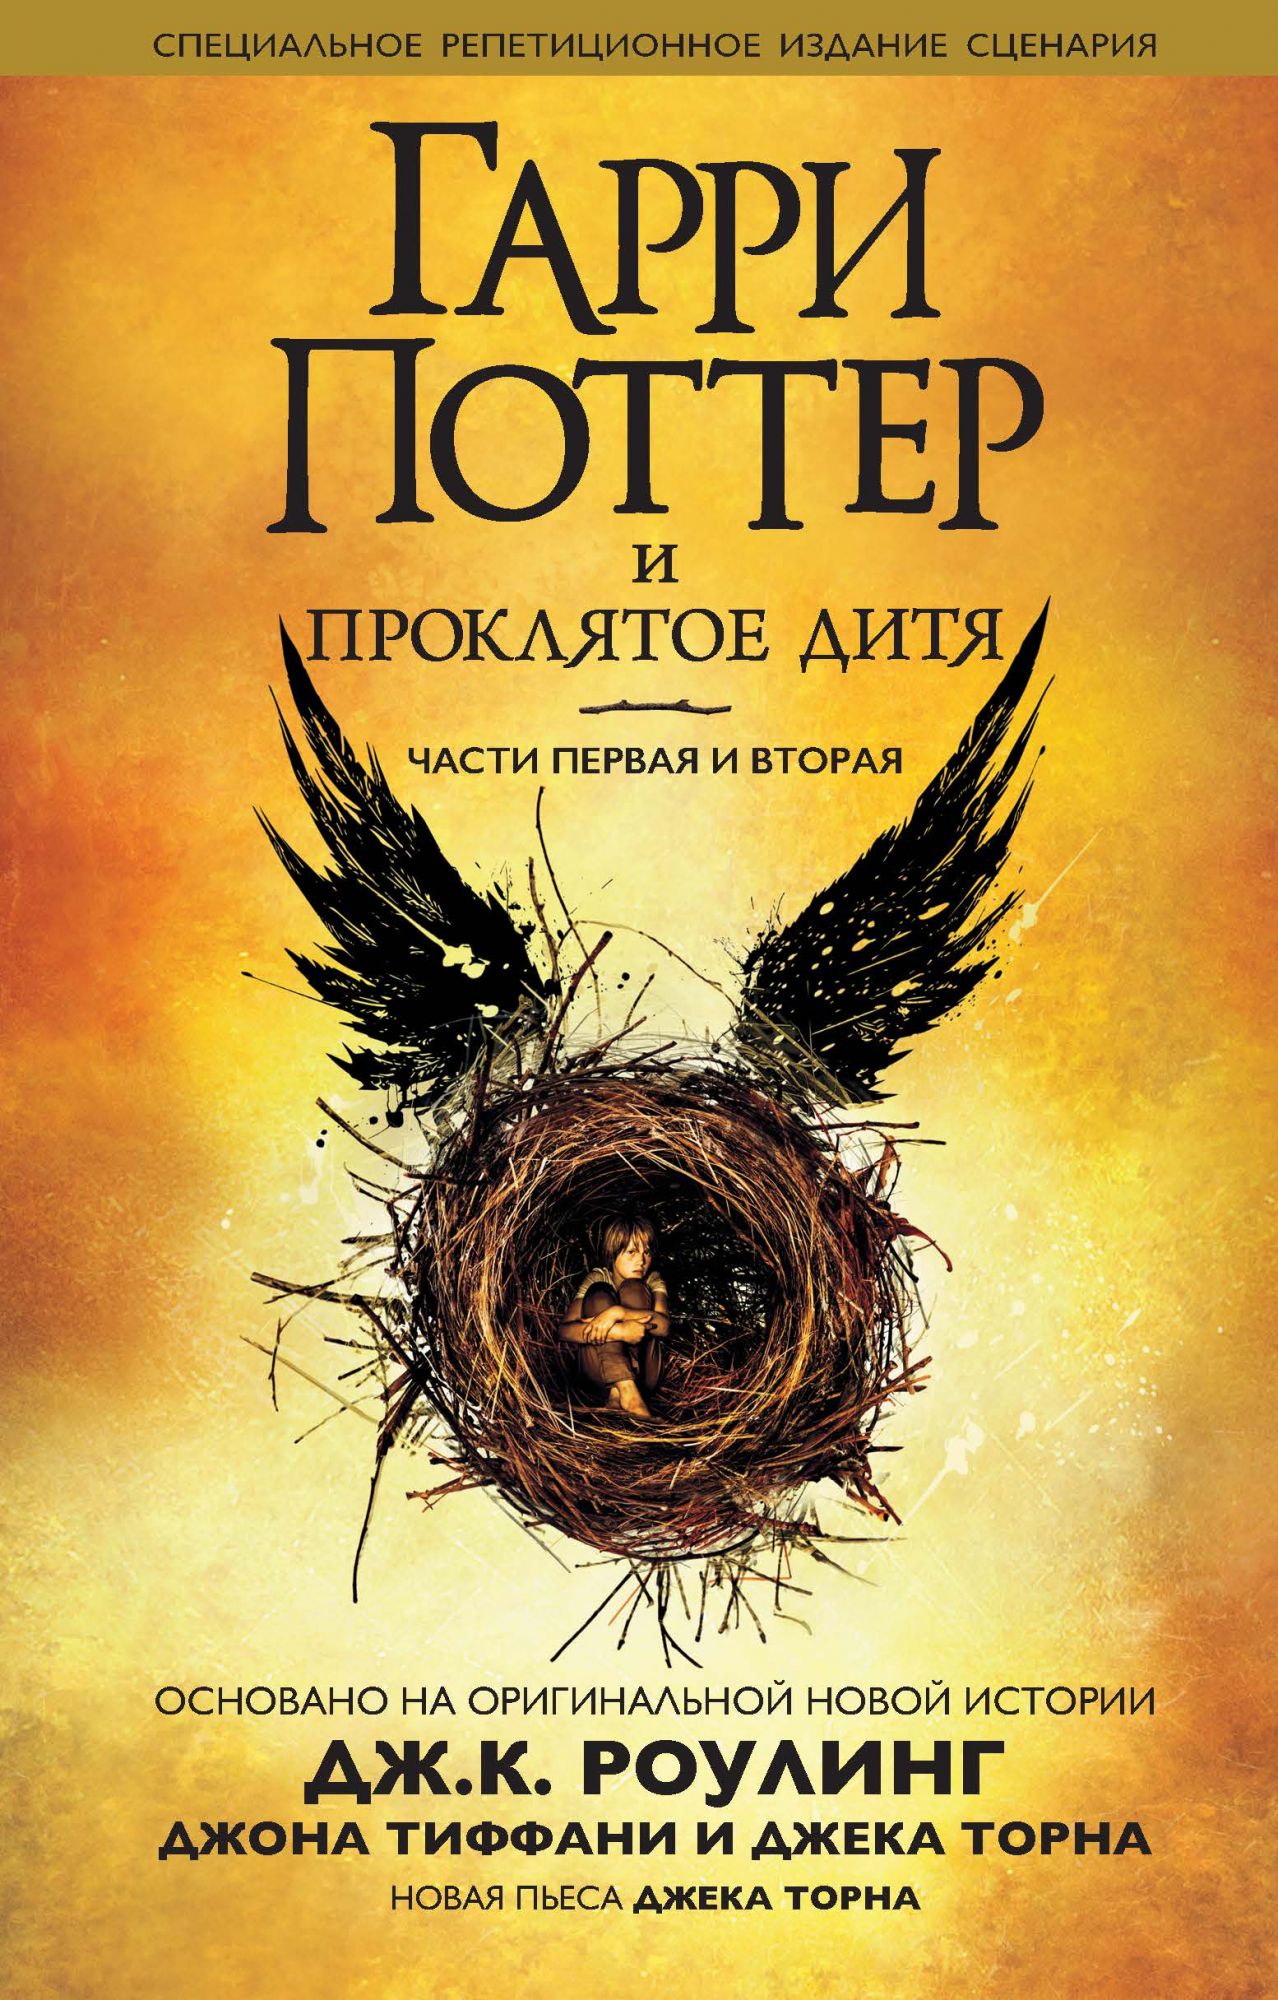 Book “Гарри Поттер и Проклятое дитя” by Джоан К. Роулинг